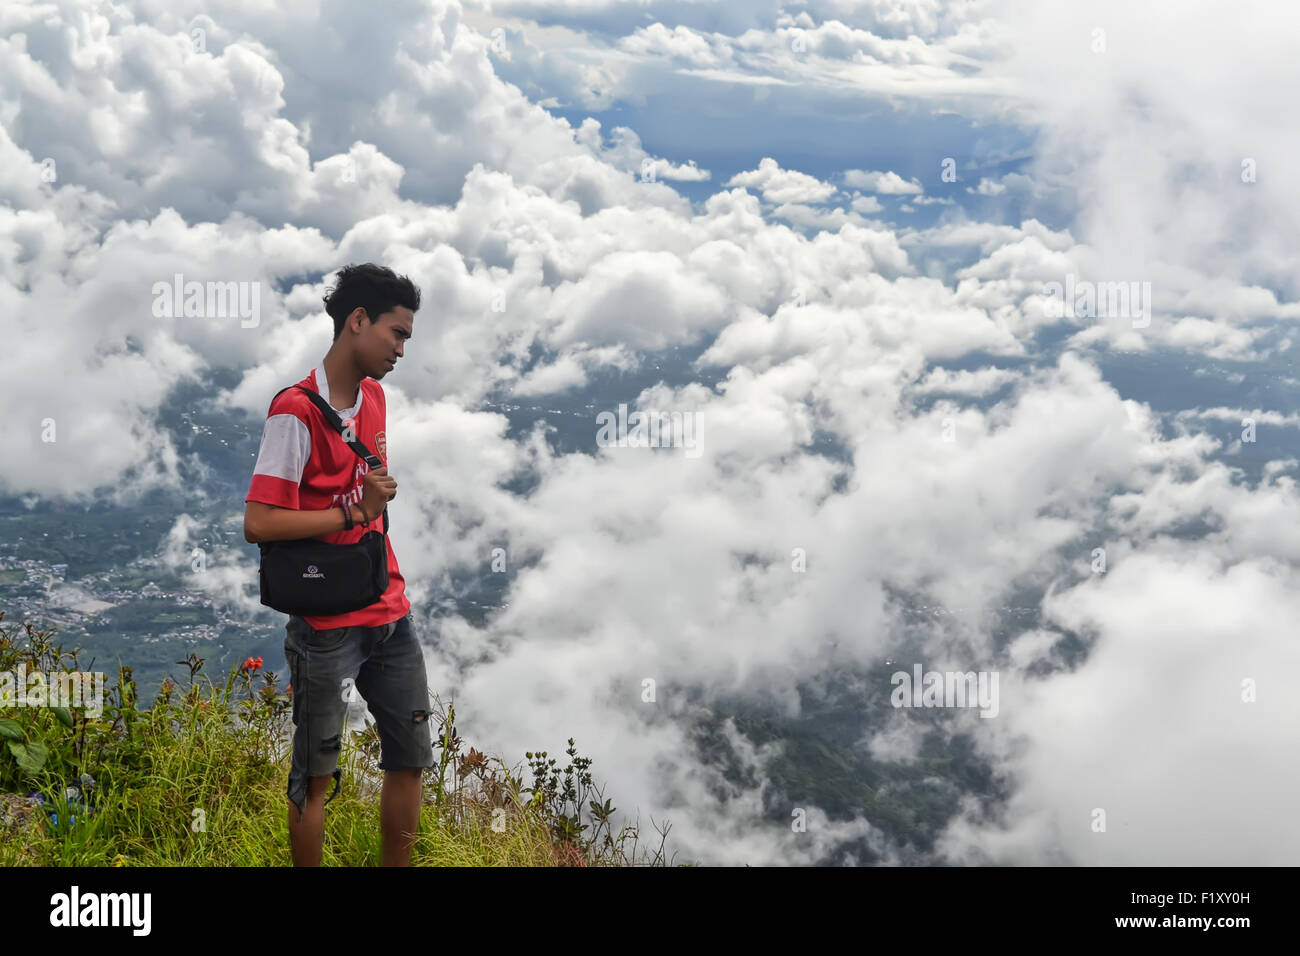 Climbers were enjoying the natural beauty of the mountain peaks Burni Telong, Bener Meriah, Aceh province, Indonesia Stock Photo